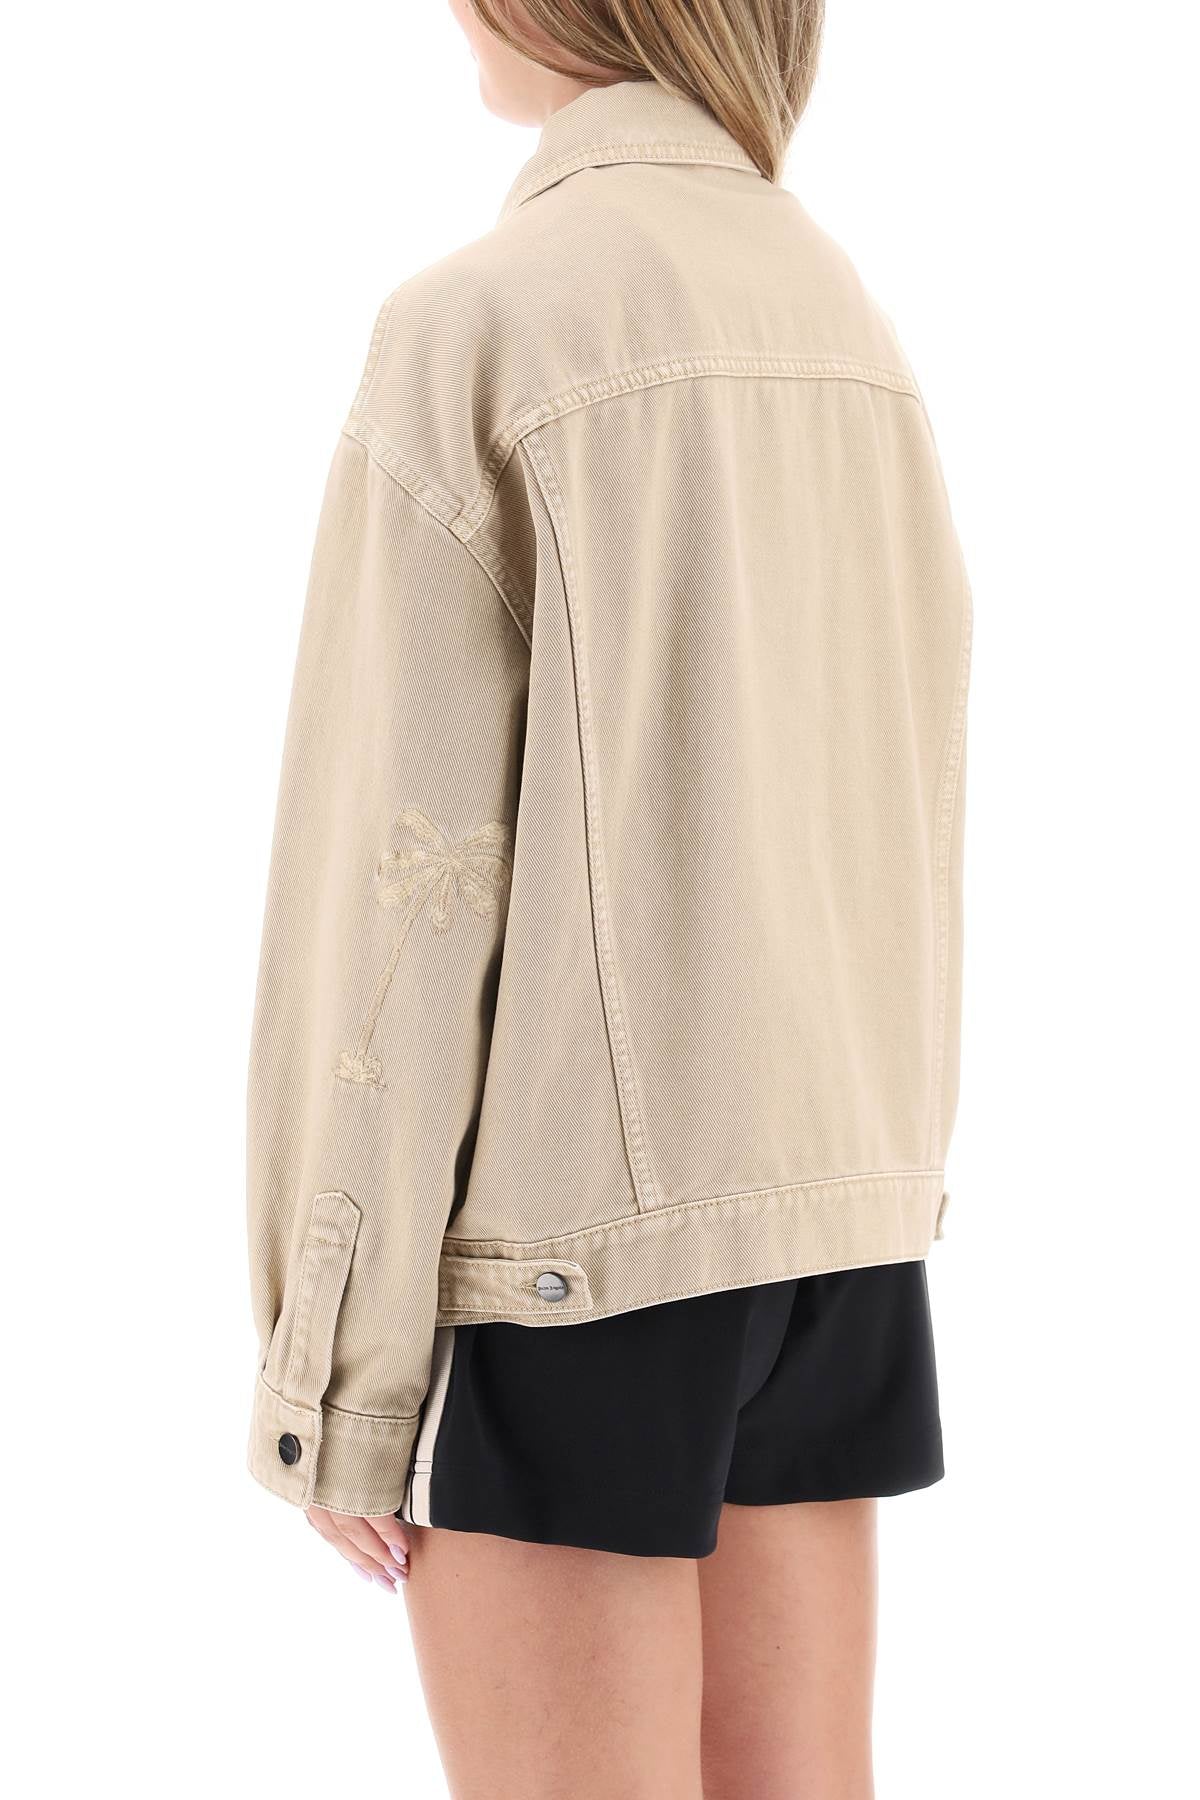 PALM ANGELS Stylish Oversized Denim Jacket for Women - Beige